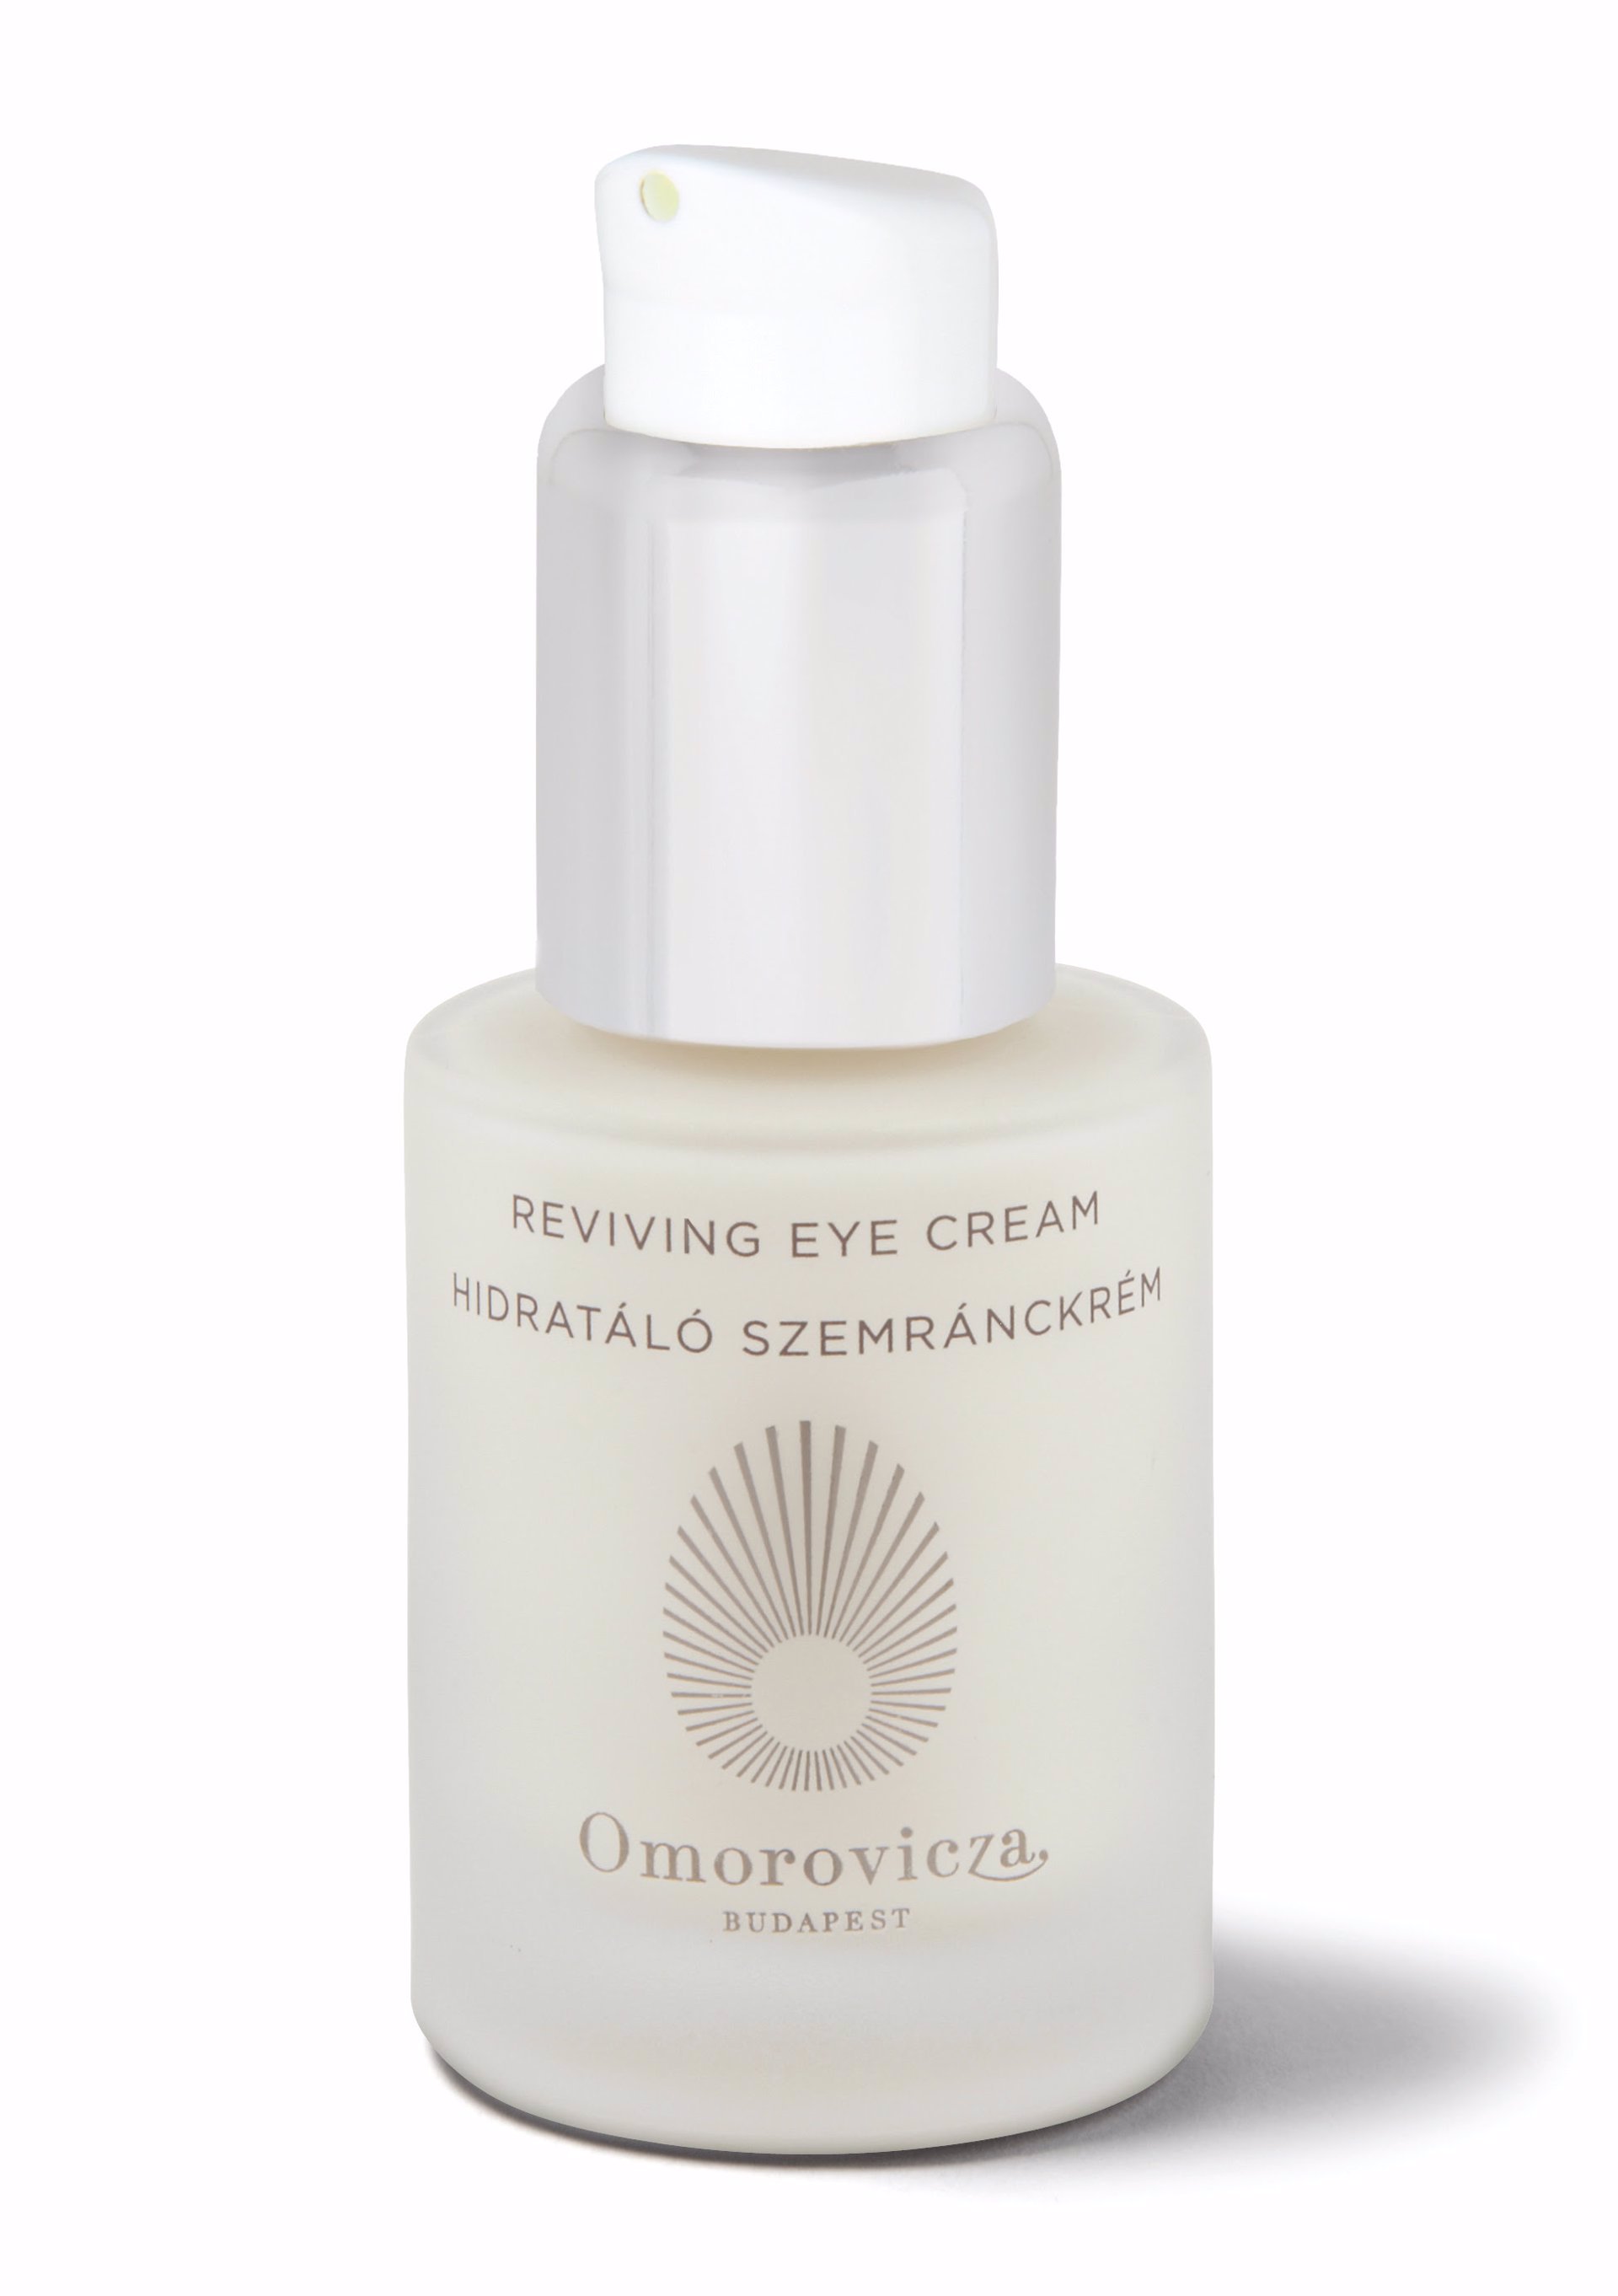 Omorovicza Reviving Eye Cream, 105€.